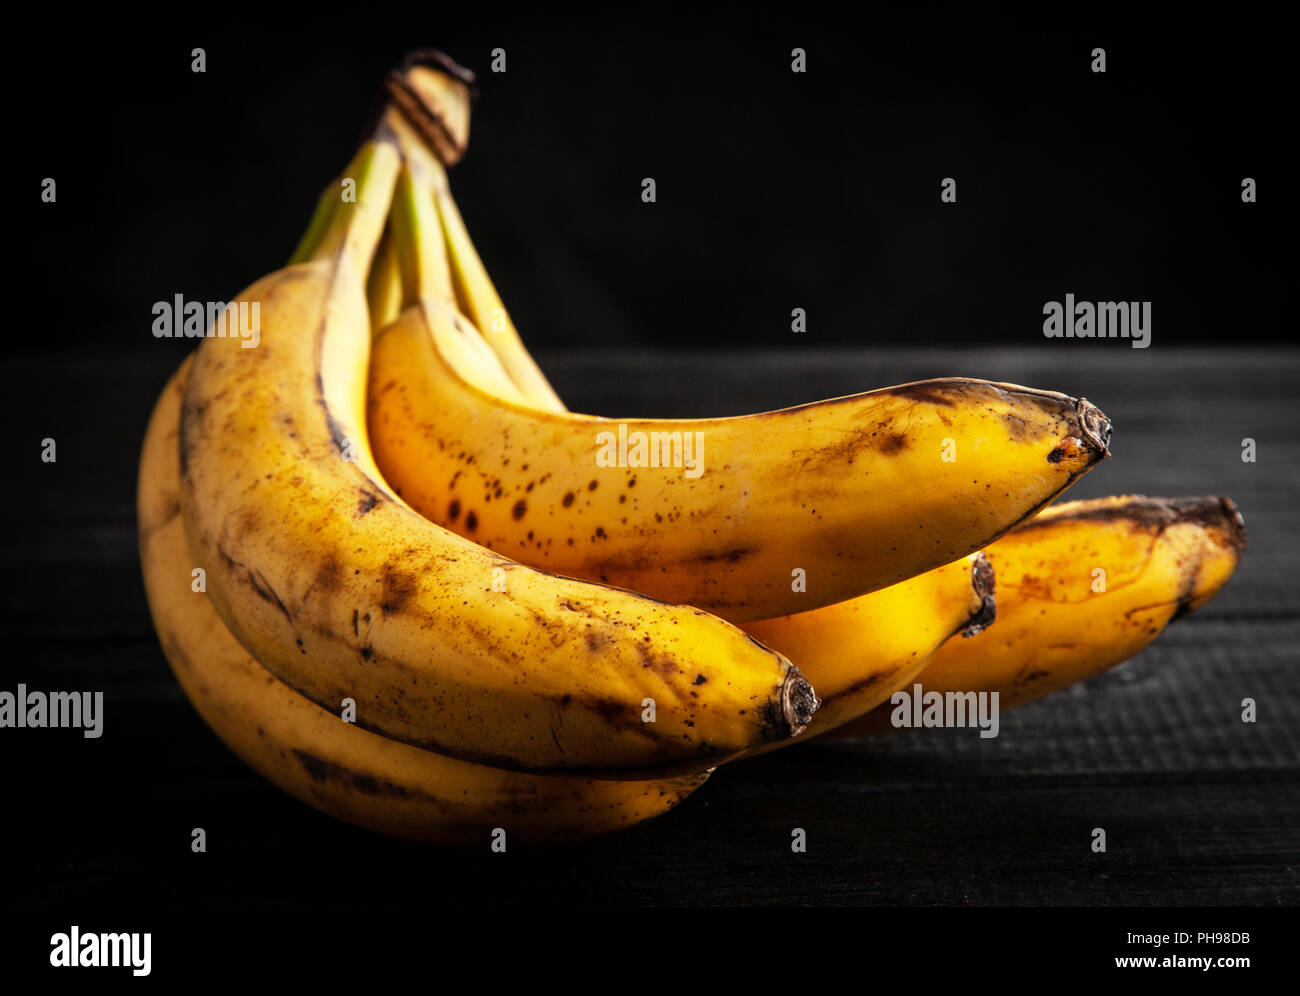 Overripe spotted bananas Stock Photo